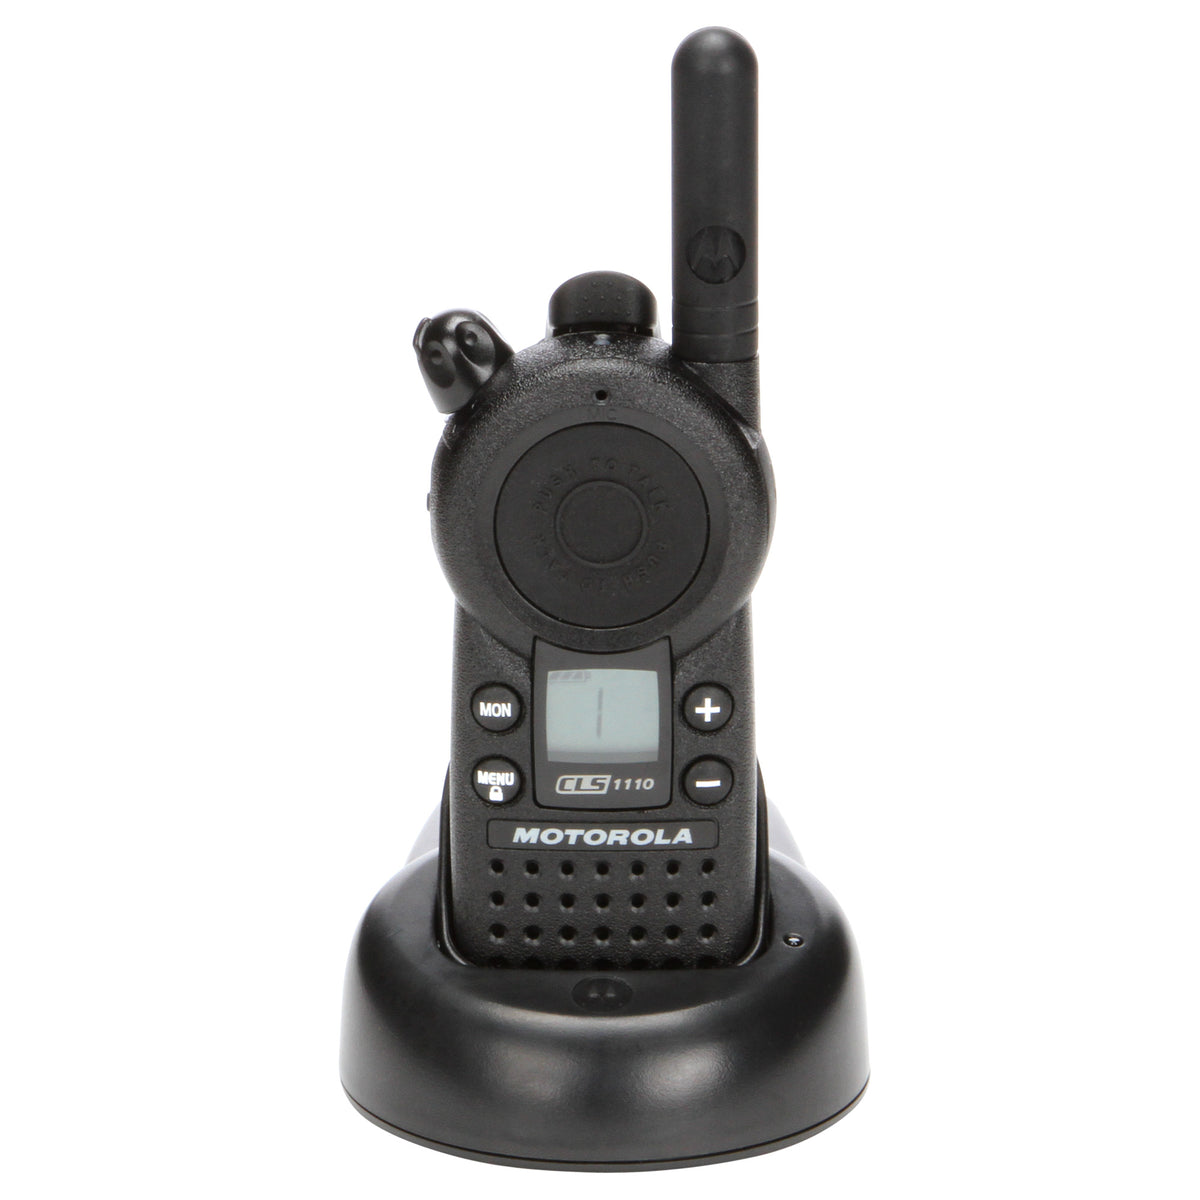 Motorola CLS1110 UHF W Ch Radios w/ Multicharger and Headsets|  TwoWayRadioGear